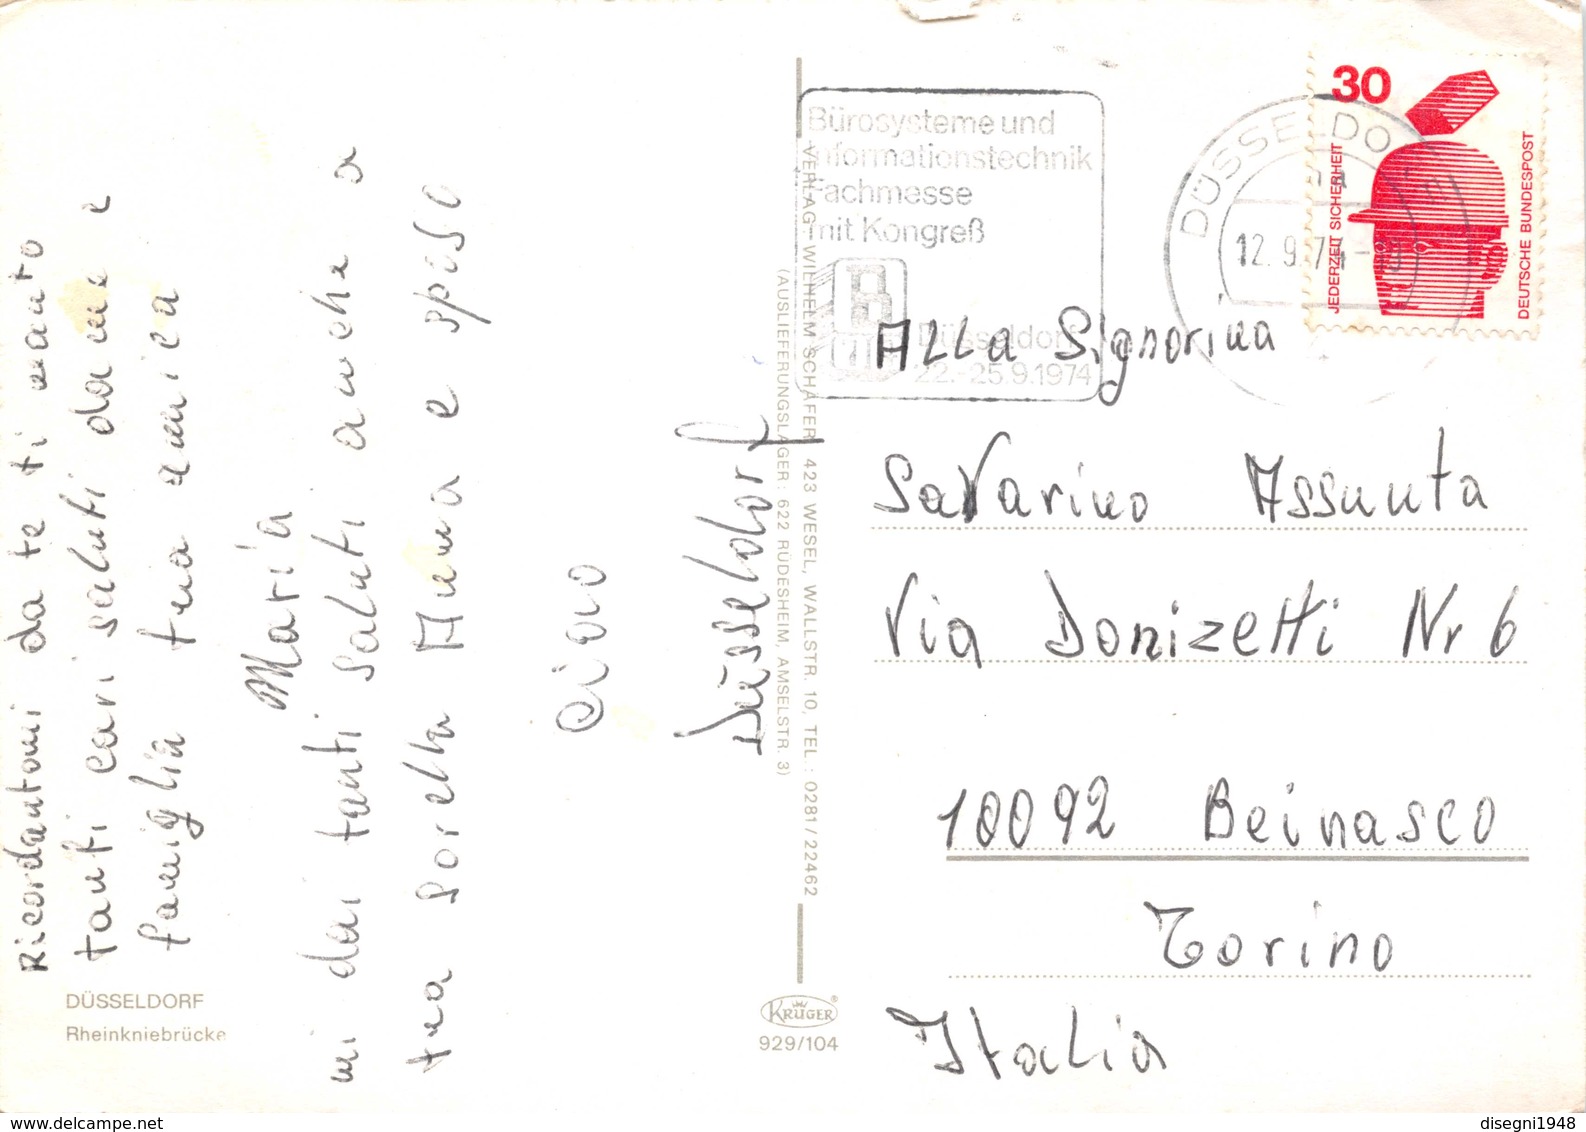 07439 "DÜSSELDORF - RHEINKNIEBRÜCKE" CART. ILL. SPED. '74 - Colombia